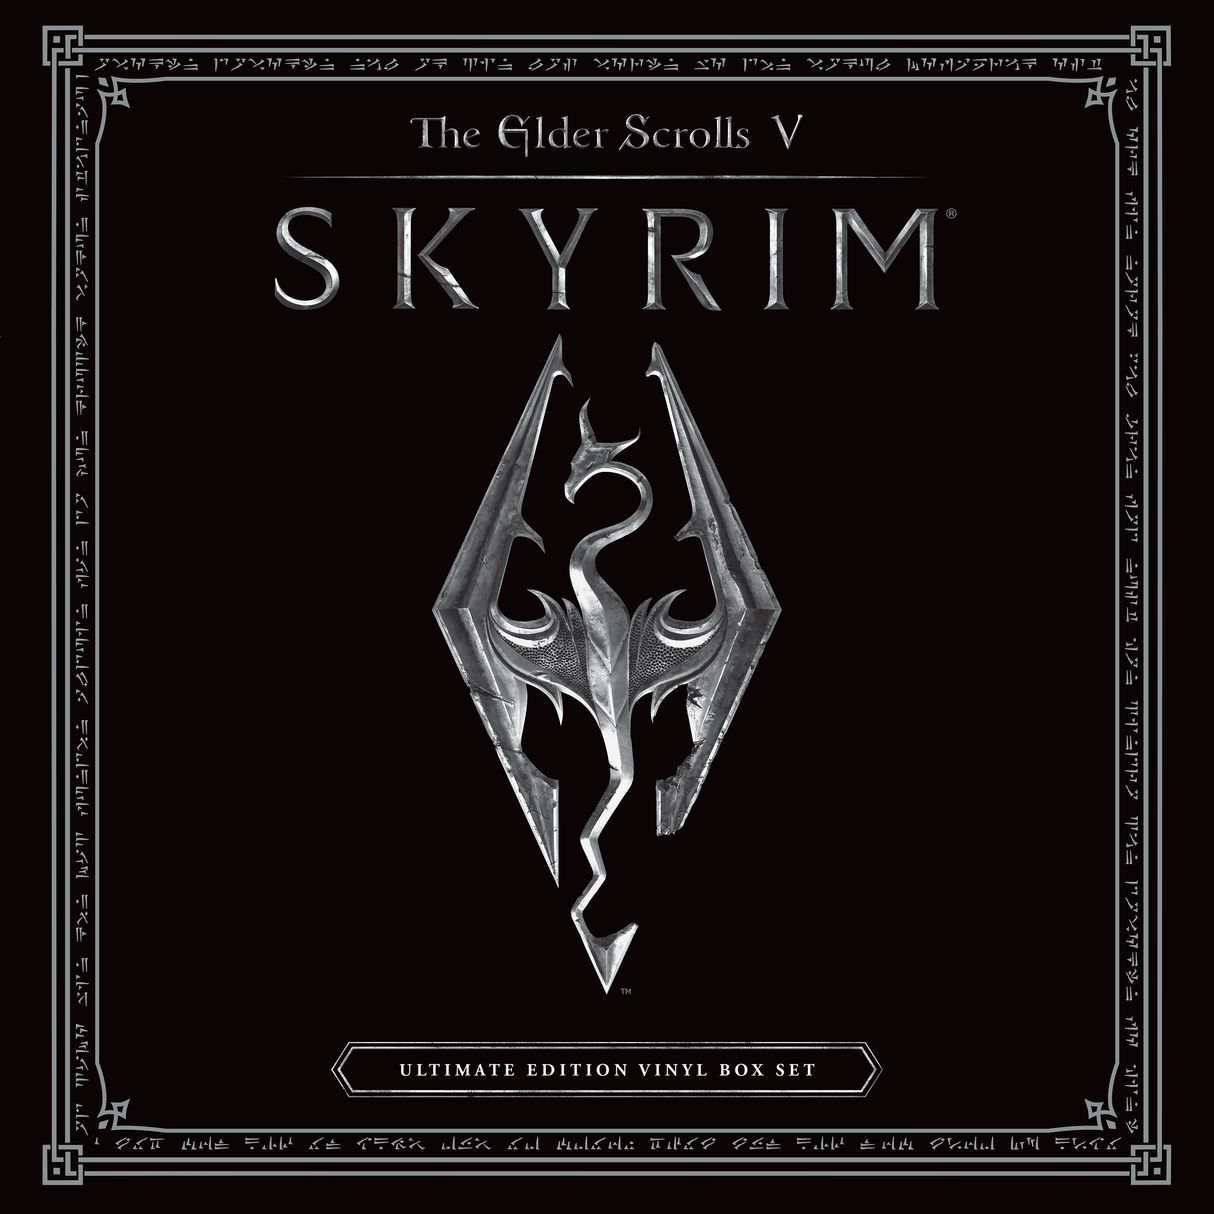 THE ELDER SCROLLS V: SKYRIM Ultimate Edition - 4LP BOX SET [PaladinVinyl.com Exclusive Green] *Pre-Order* VINYL